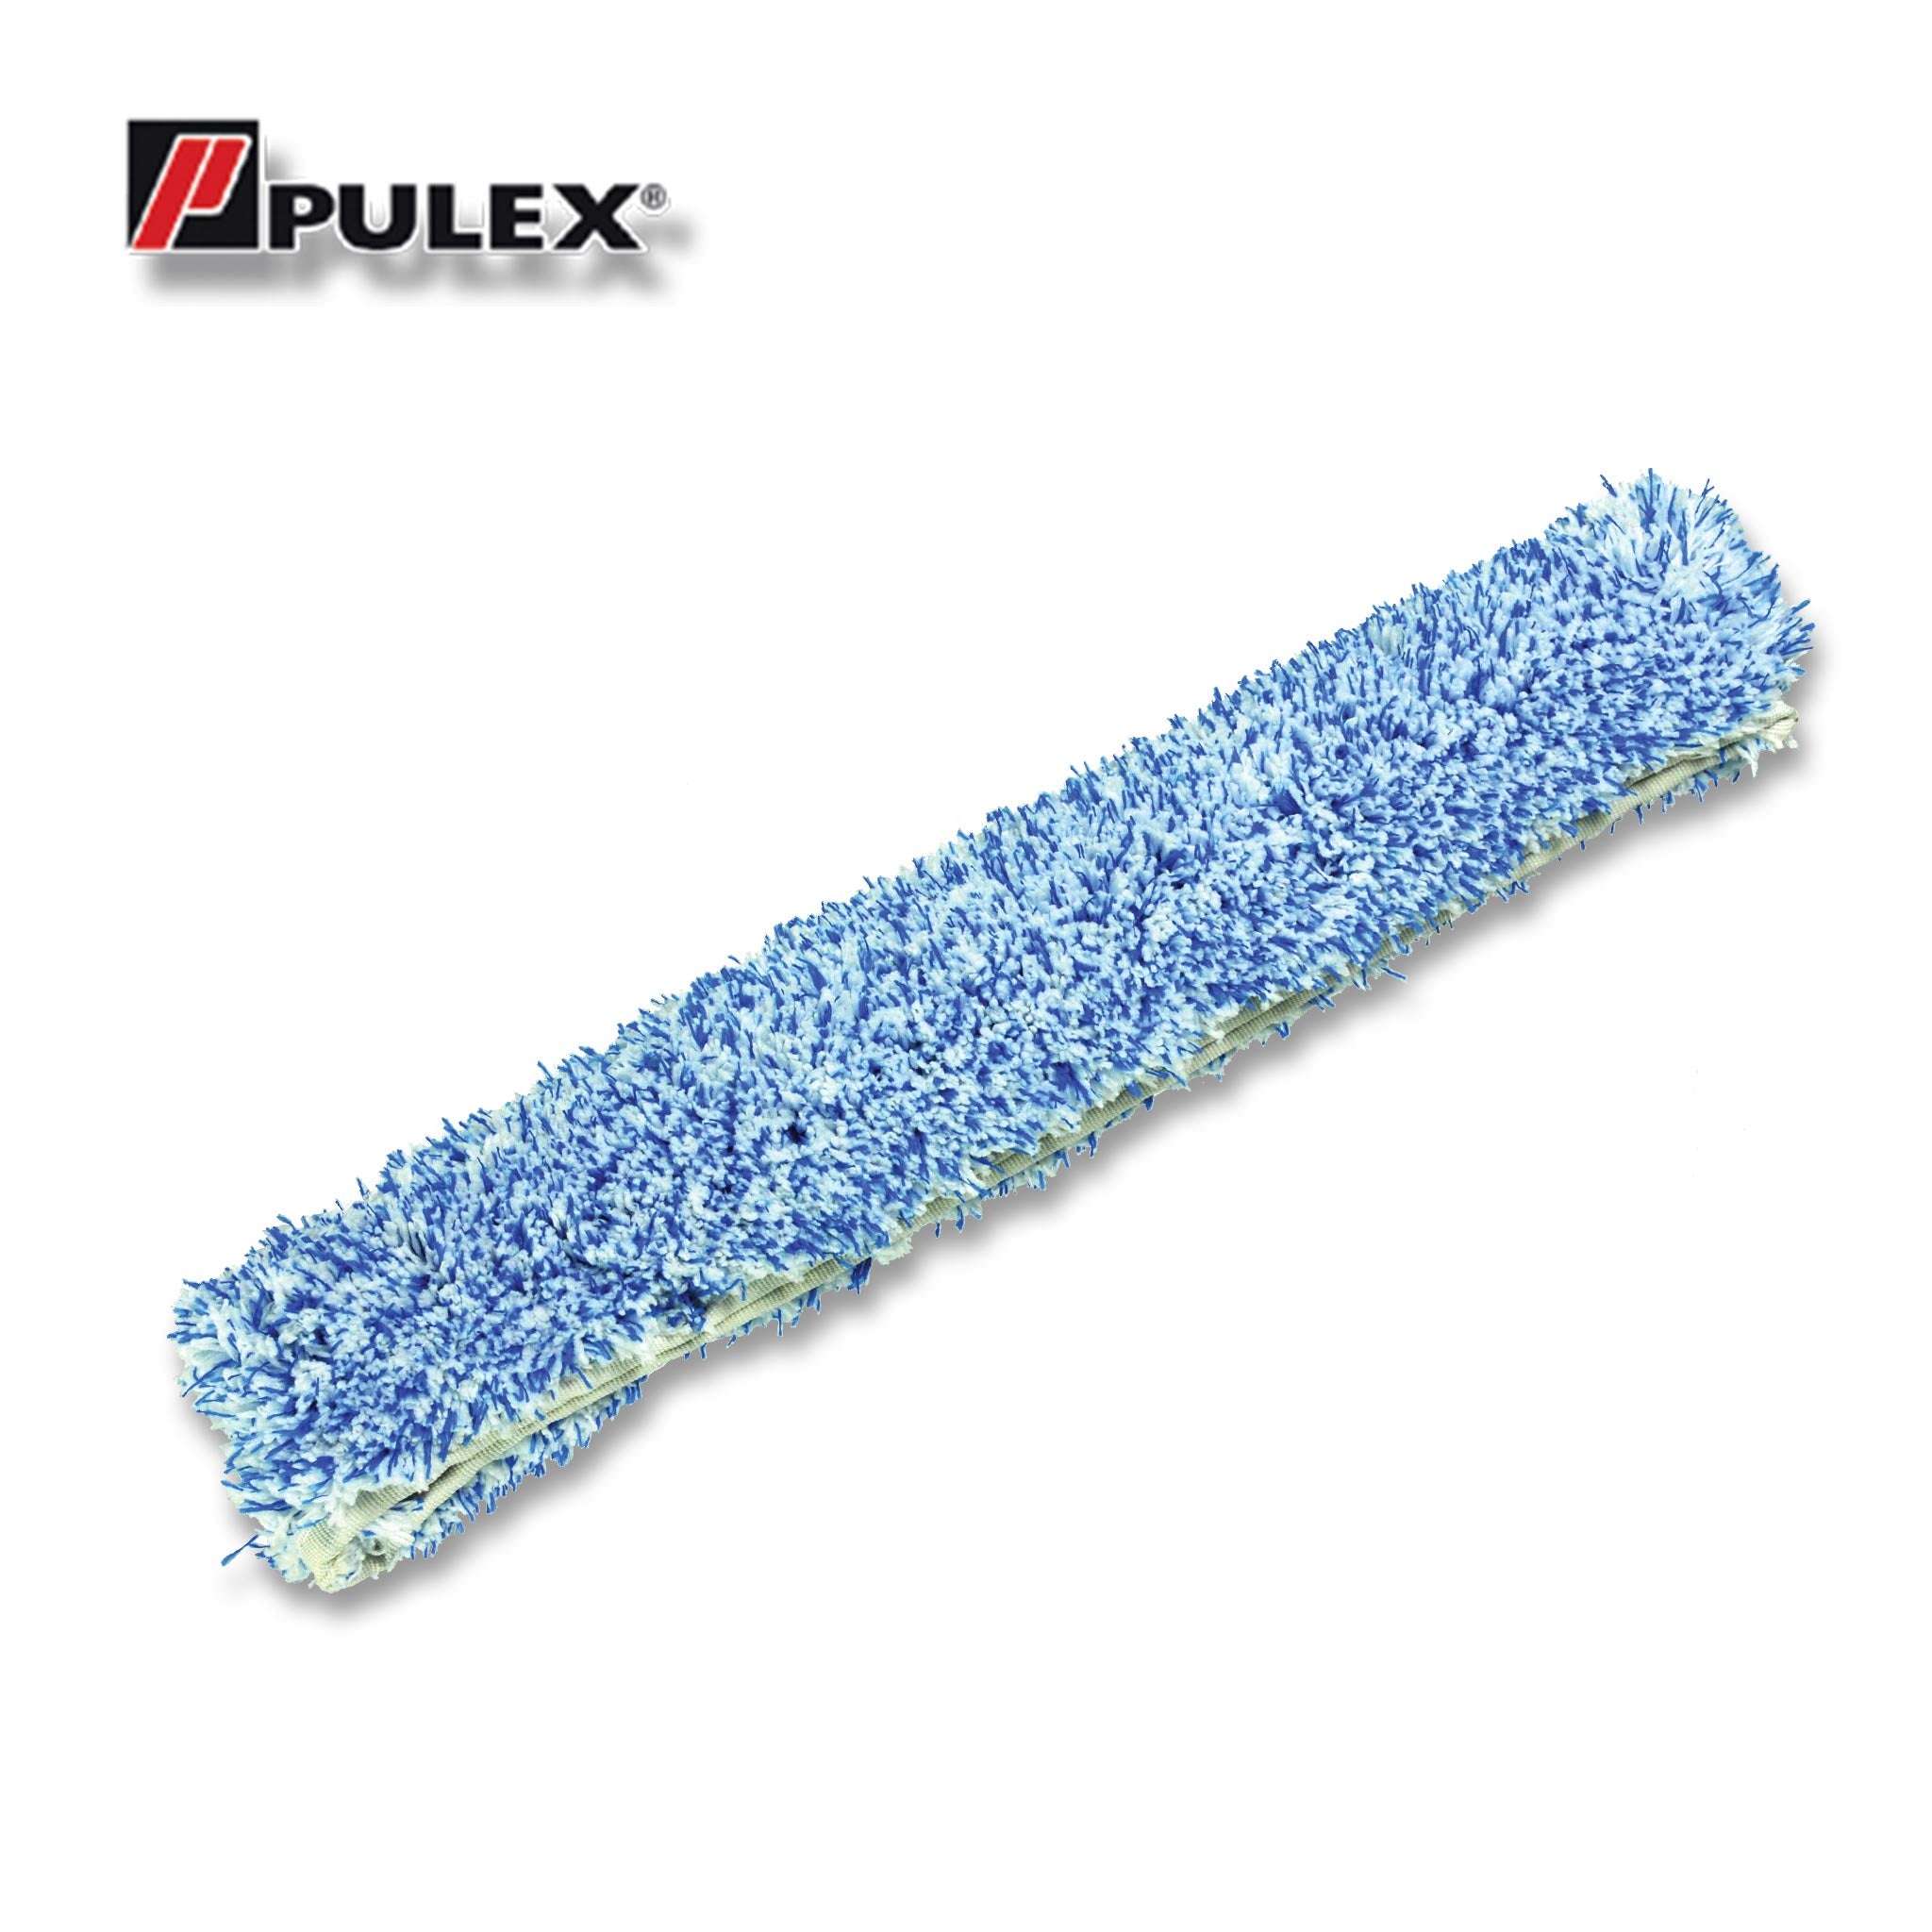 Pulex Microfibre Washer Sleeve